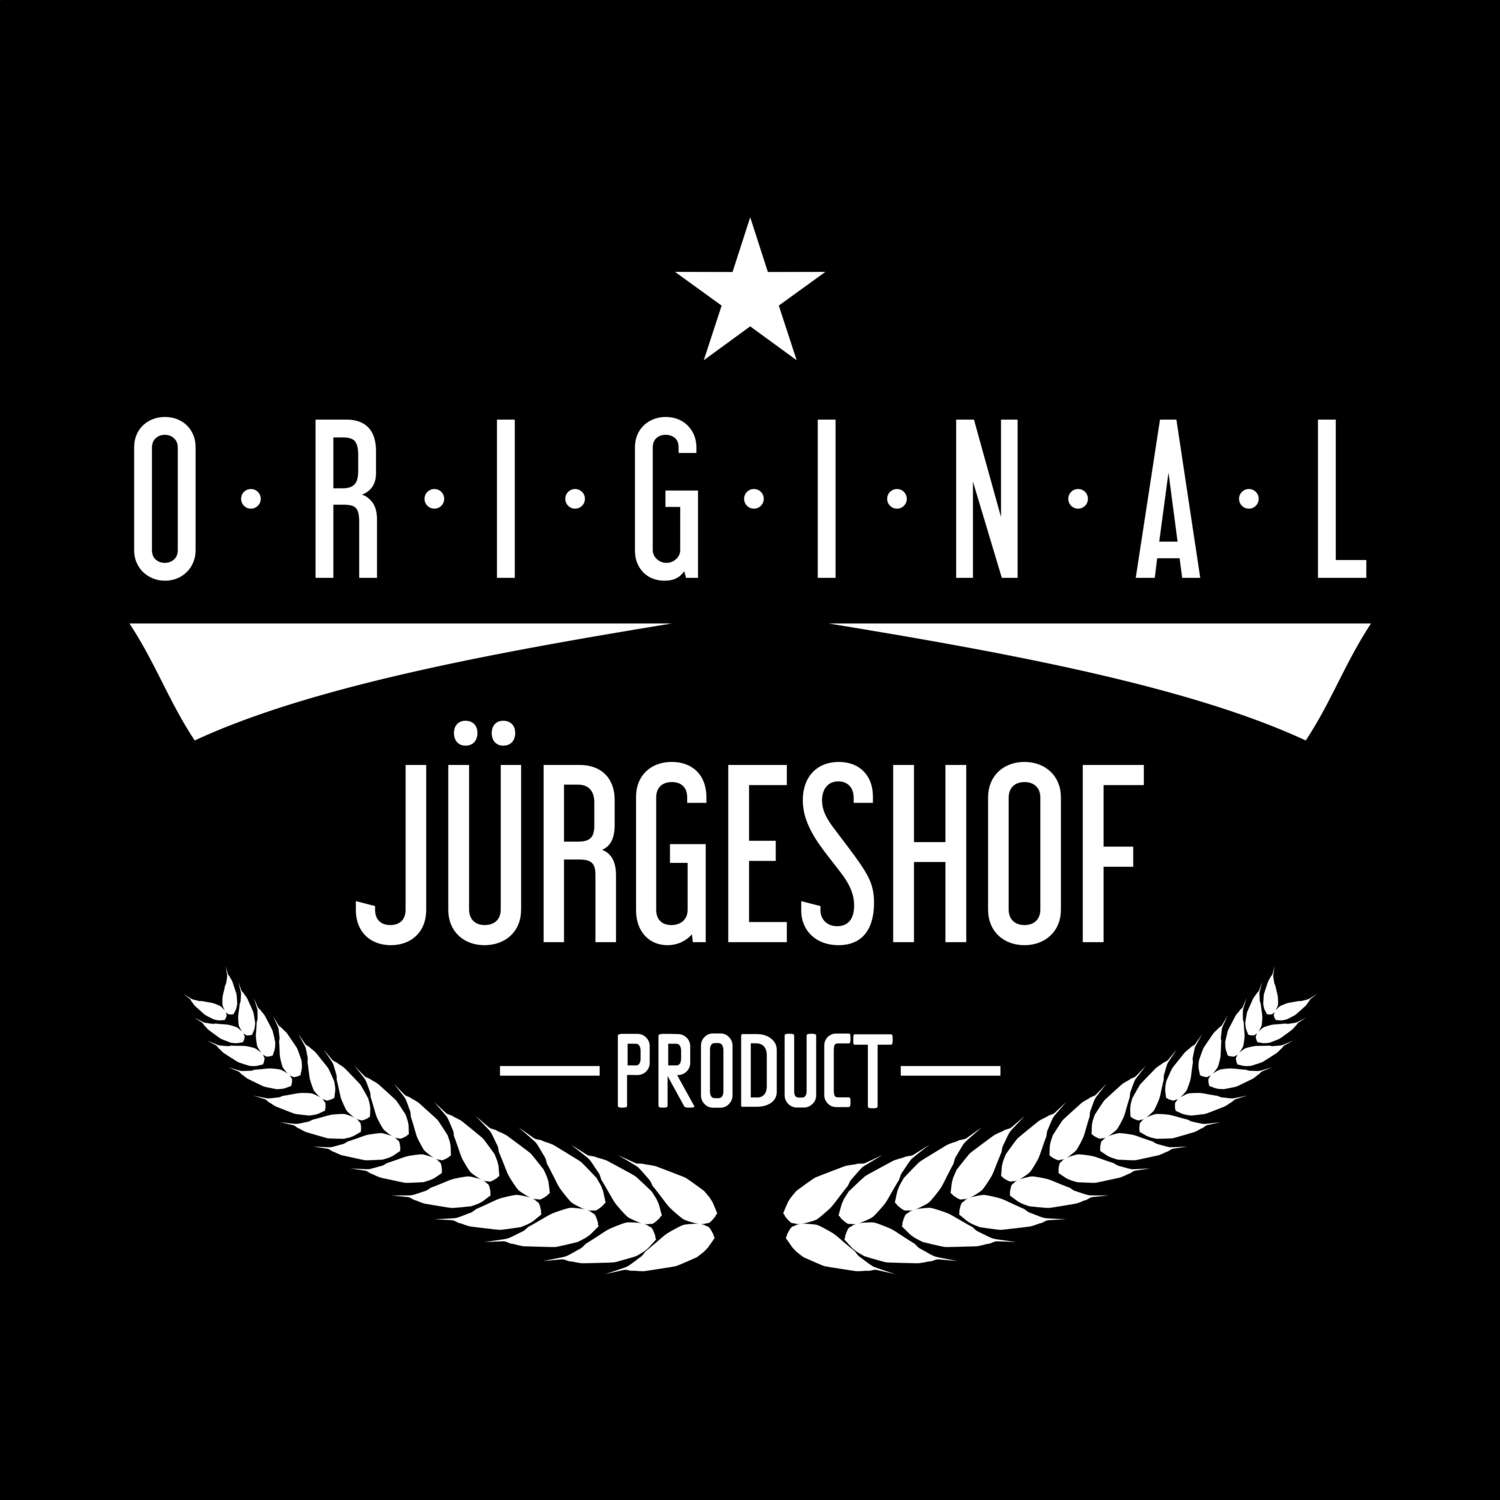 Jürgeshof T-Shirt »Original Product«